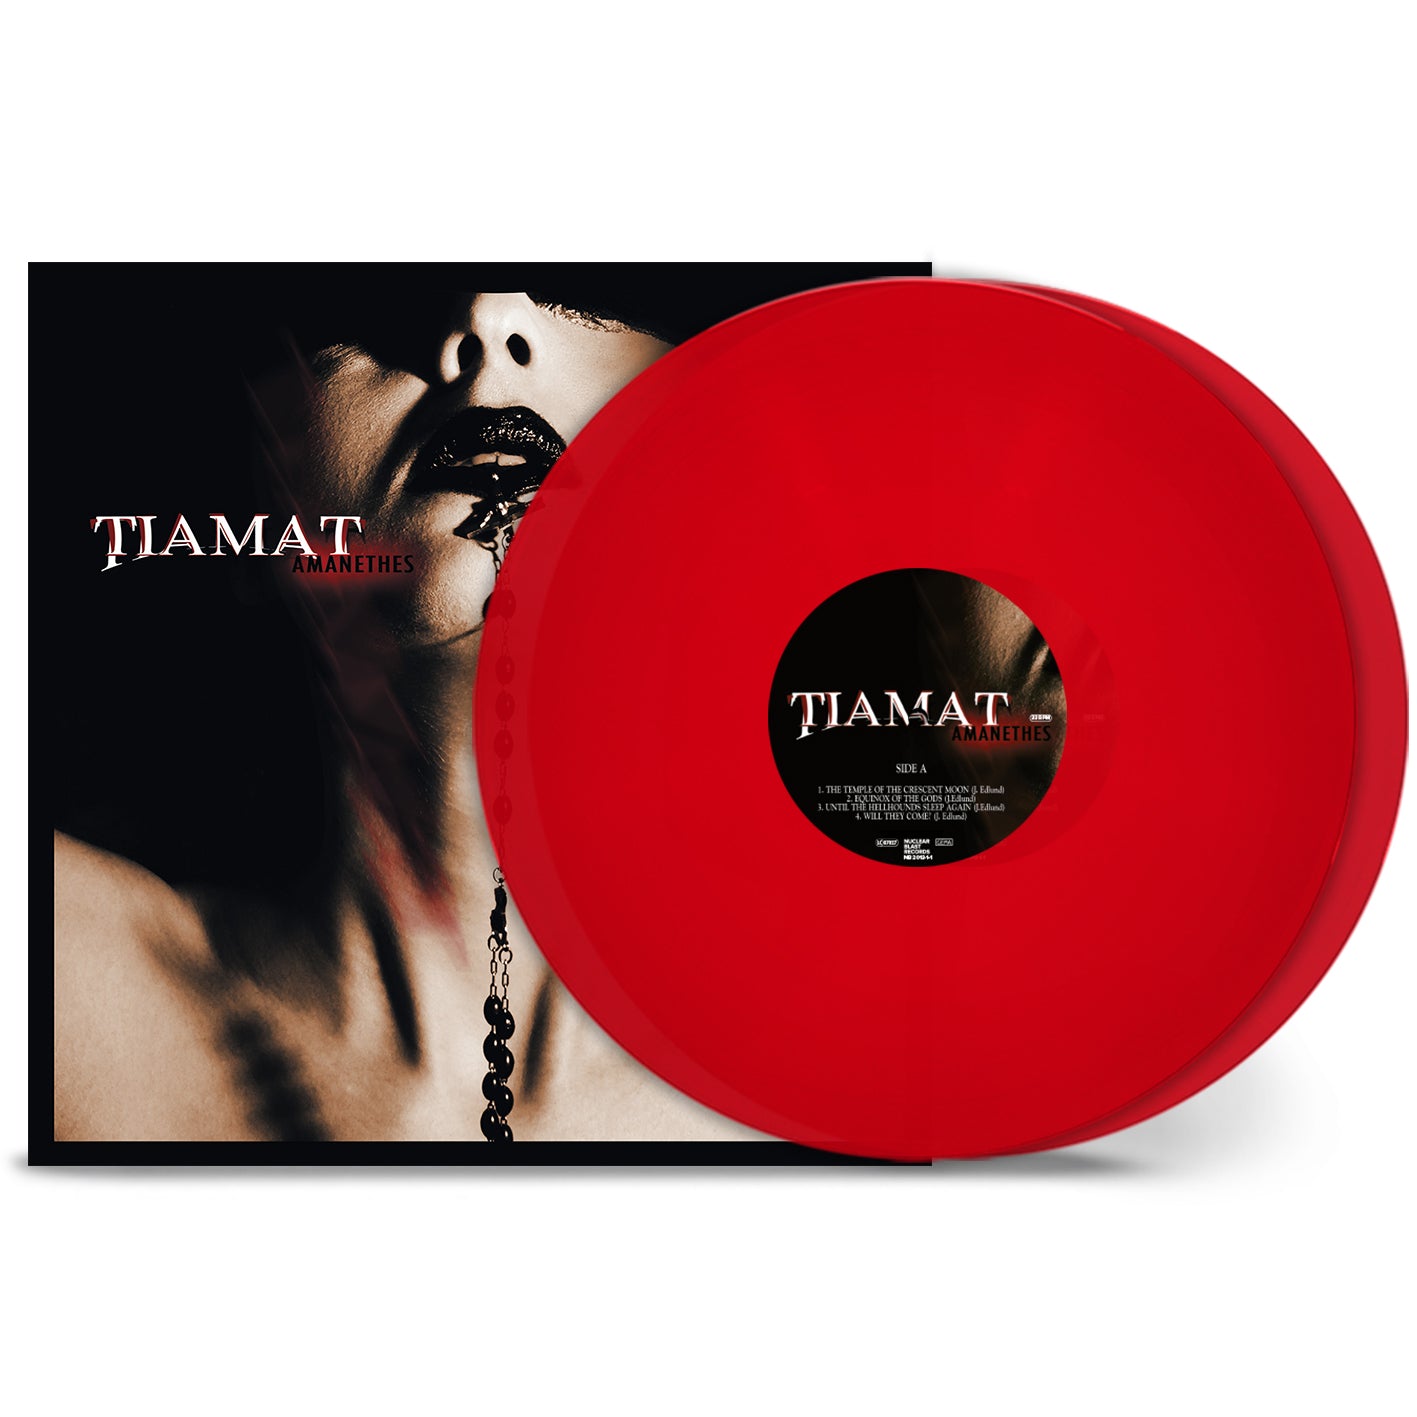 Tiamat "Amanethes" 2x12" Transparent Red Vinyl - PRE-ORDER